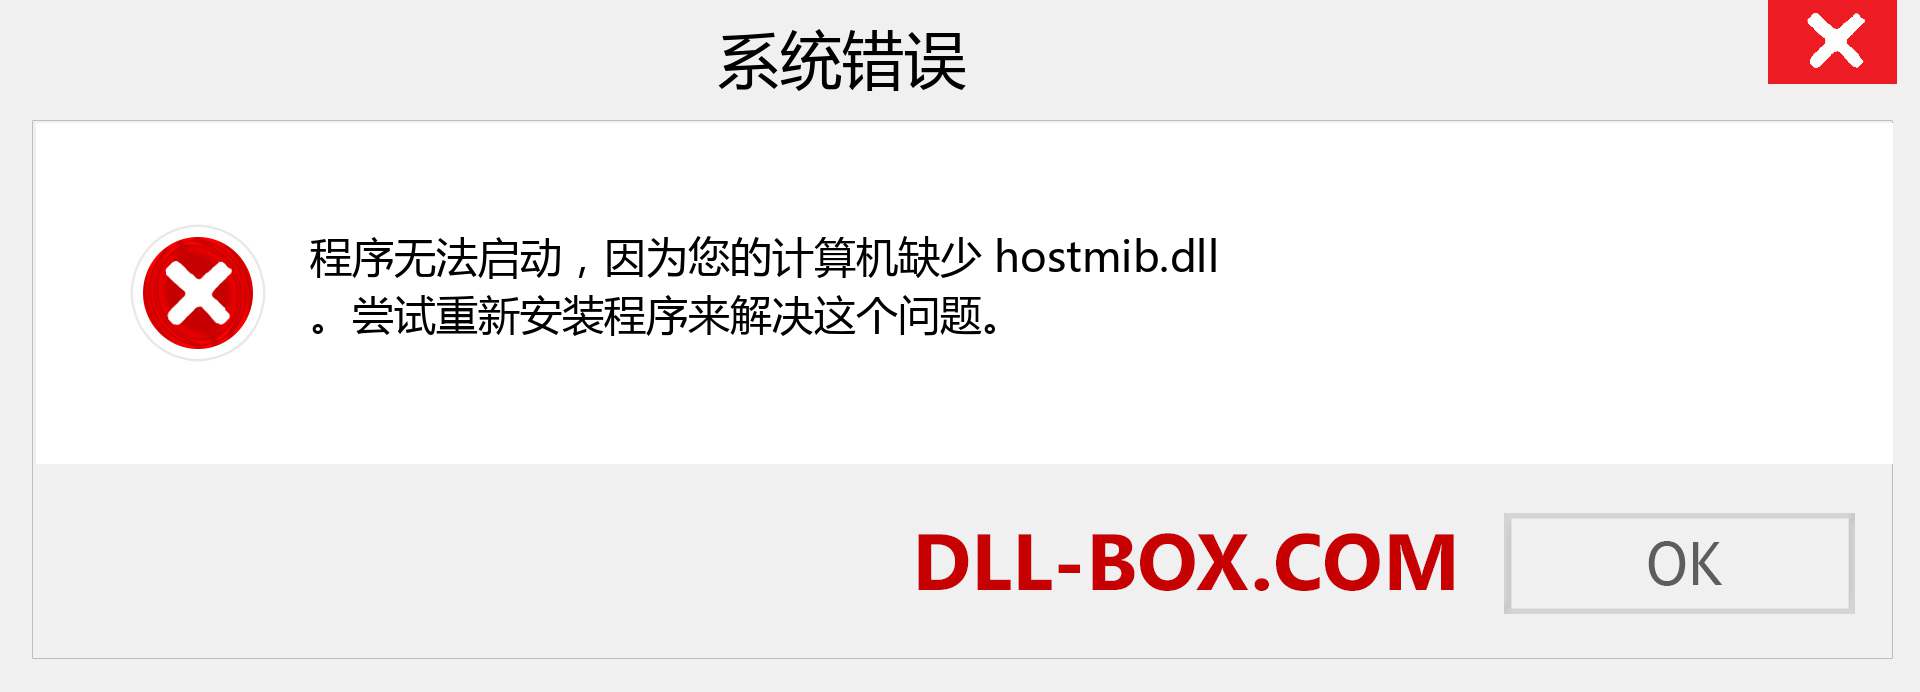 hostmib.dll 文件丢失？。 适用于 Windows 7、8、10 的下载 - 修复 Windows、照片、图像上的 hostmib dll 丢失错误